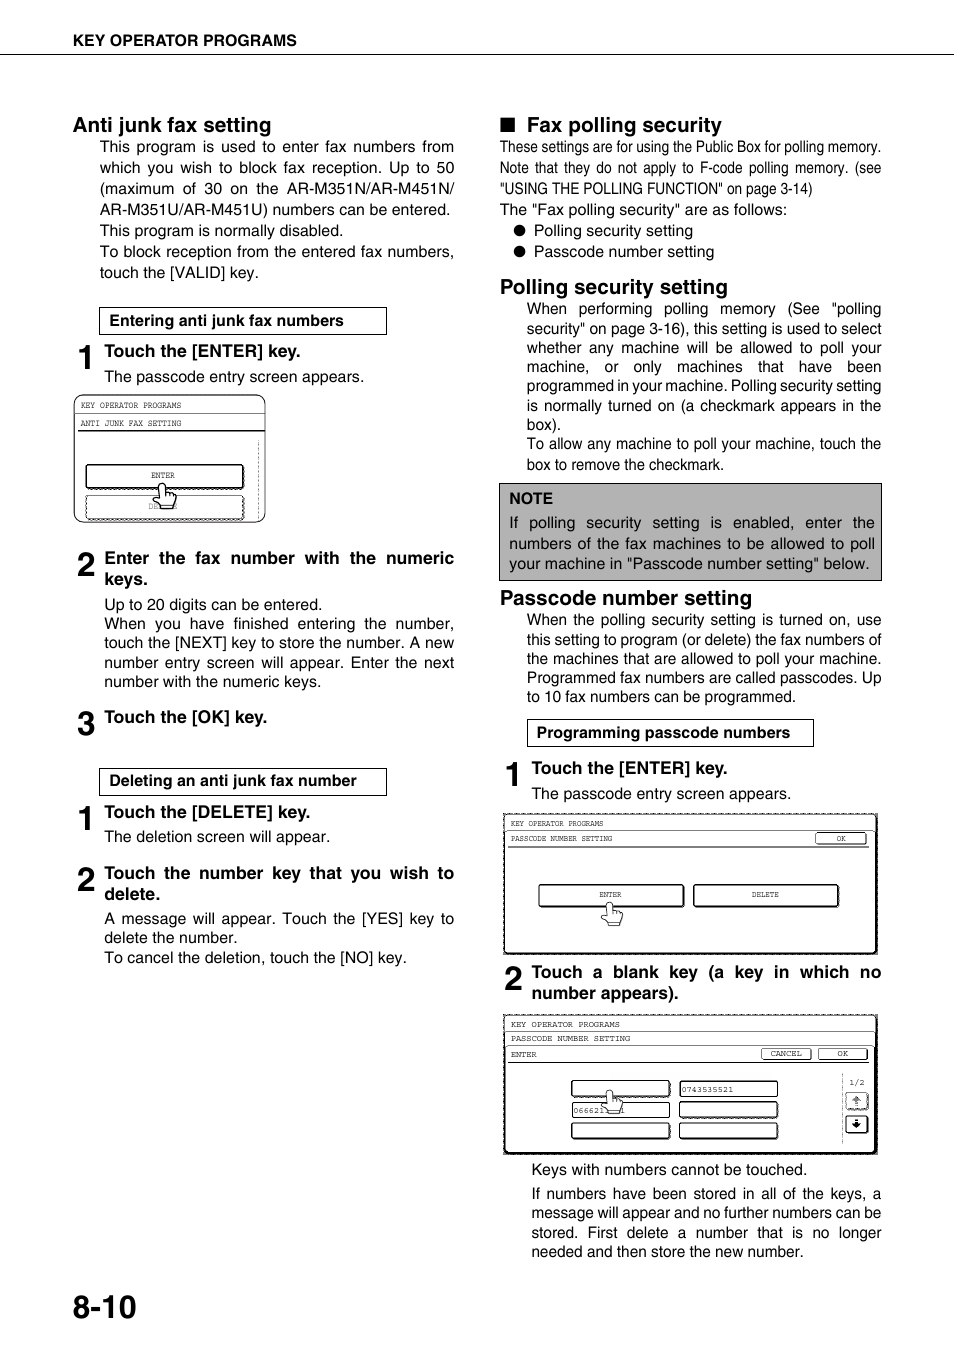 Anti junk fax setting, Fax polling security, Polling security setting | Passcode number setting | Sharp MX-M350U User Manual | Page 100 / 110